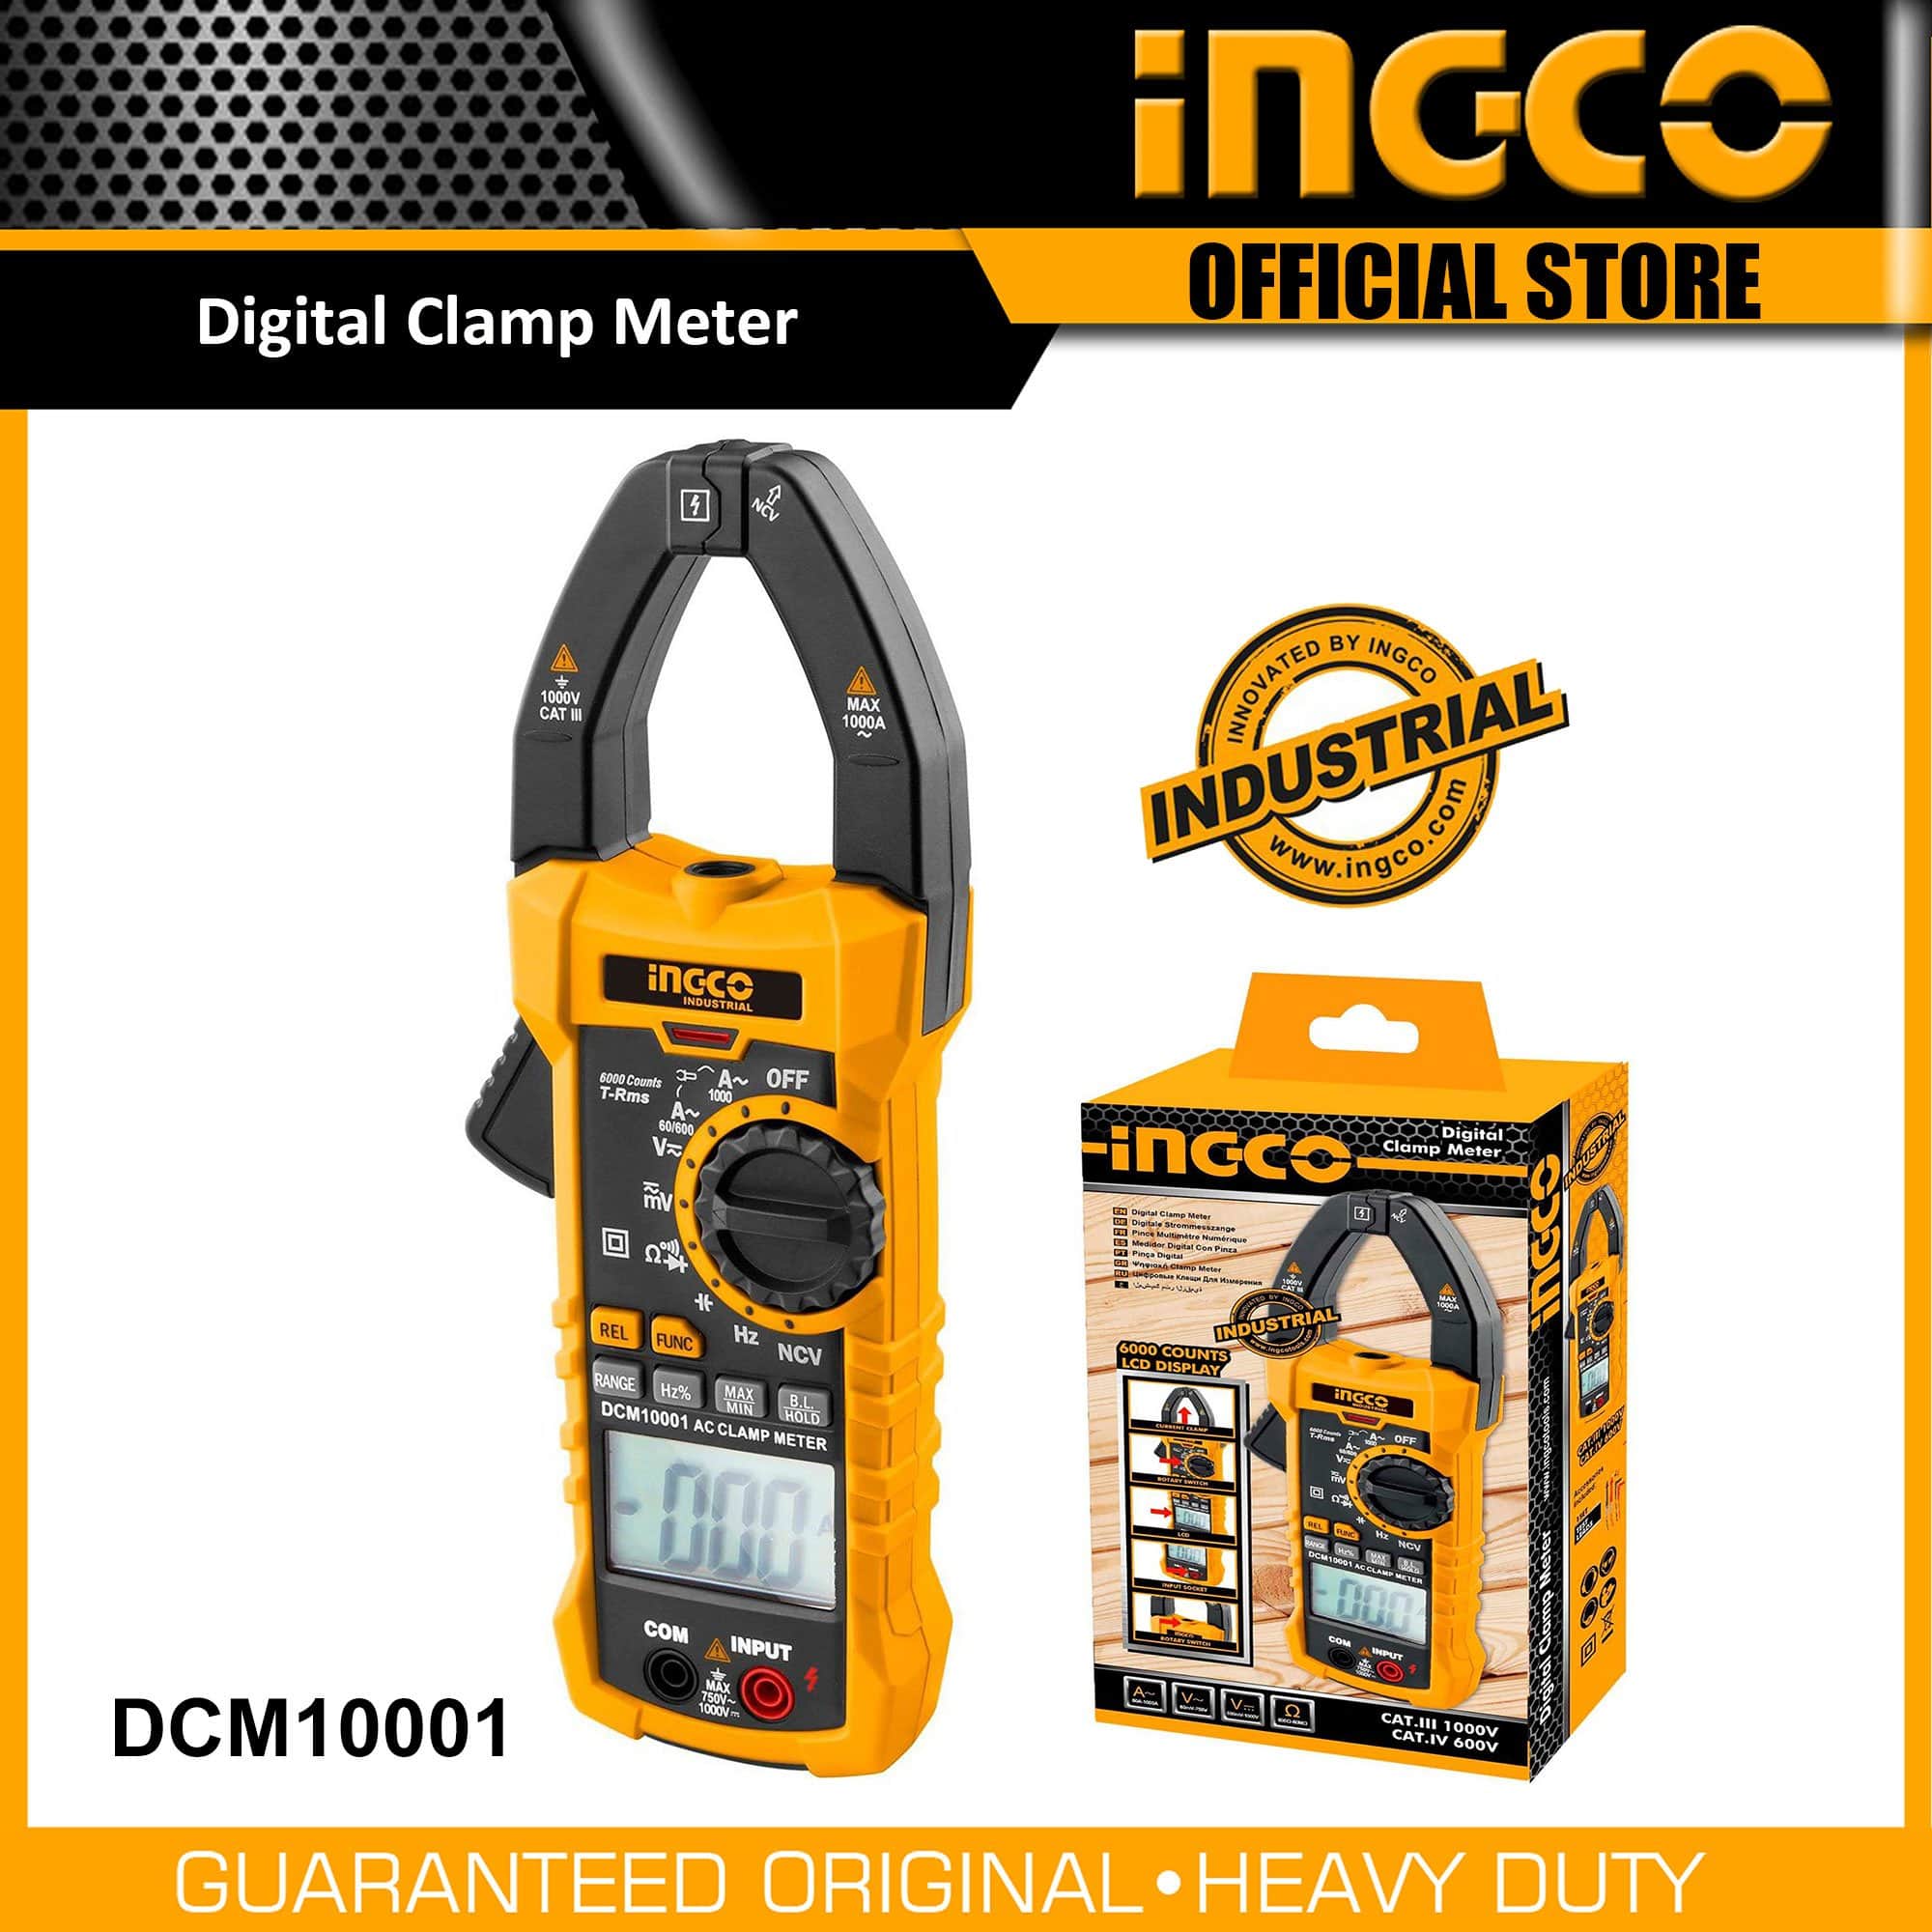 Ingco 1000Amp AC Digital Clamp Meter - DCM10001 | Supply Master | Accra, Ghana Tools Building Steel Engineering Hardware tool